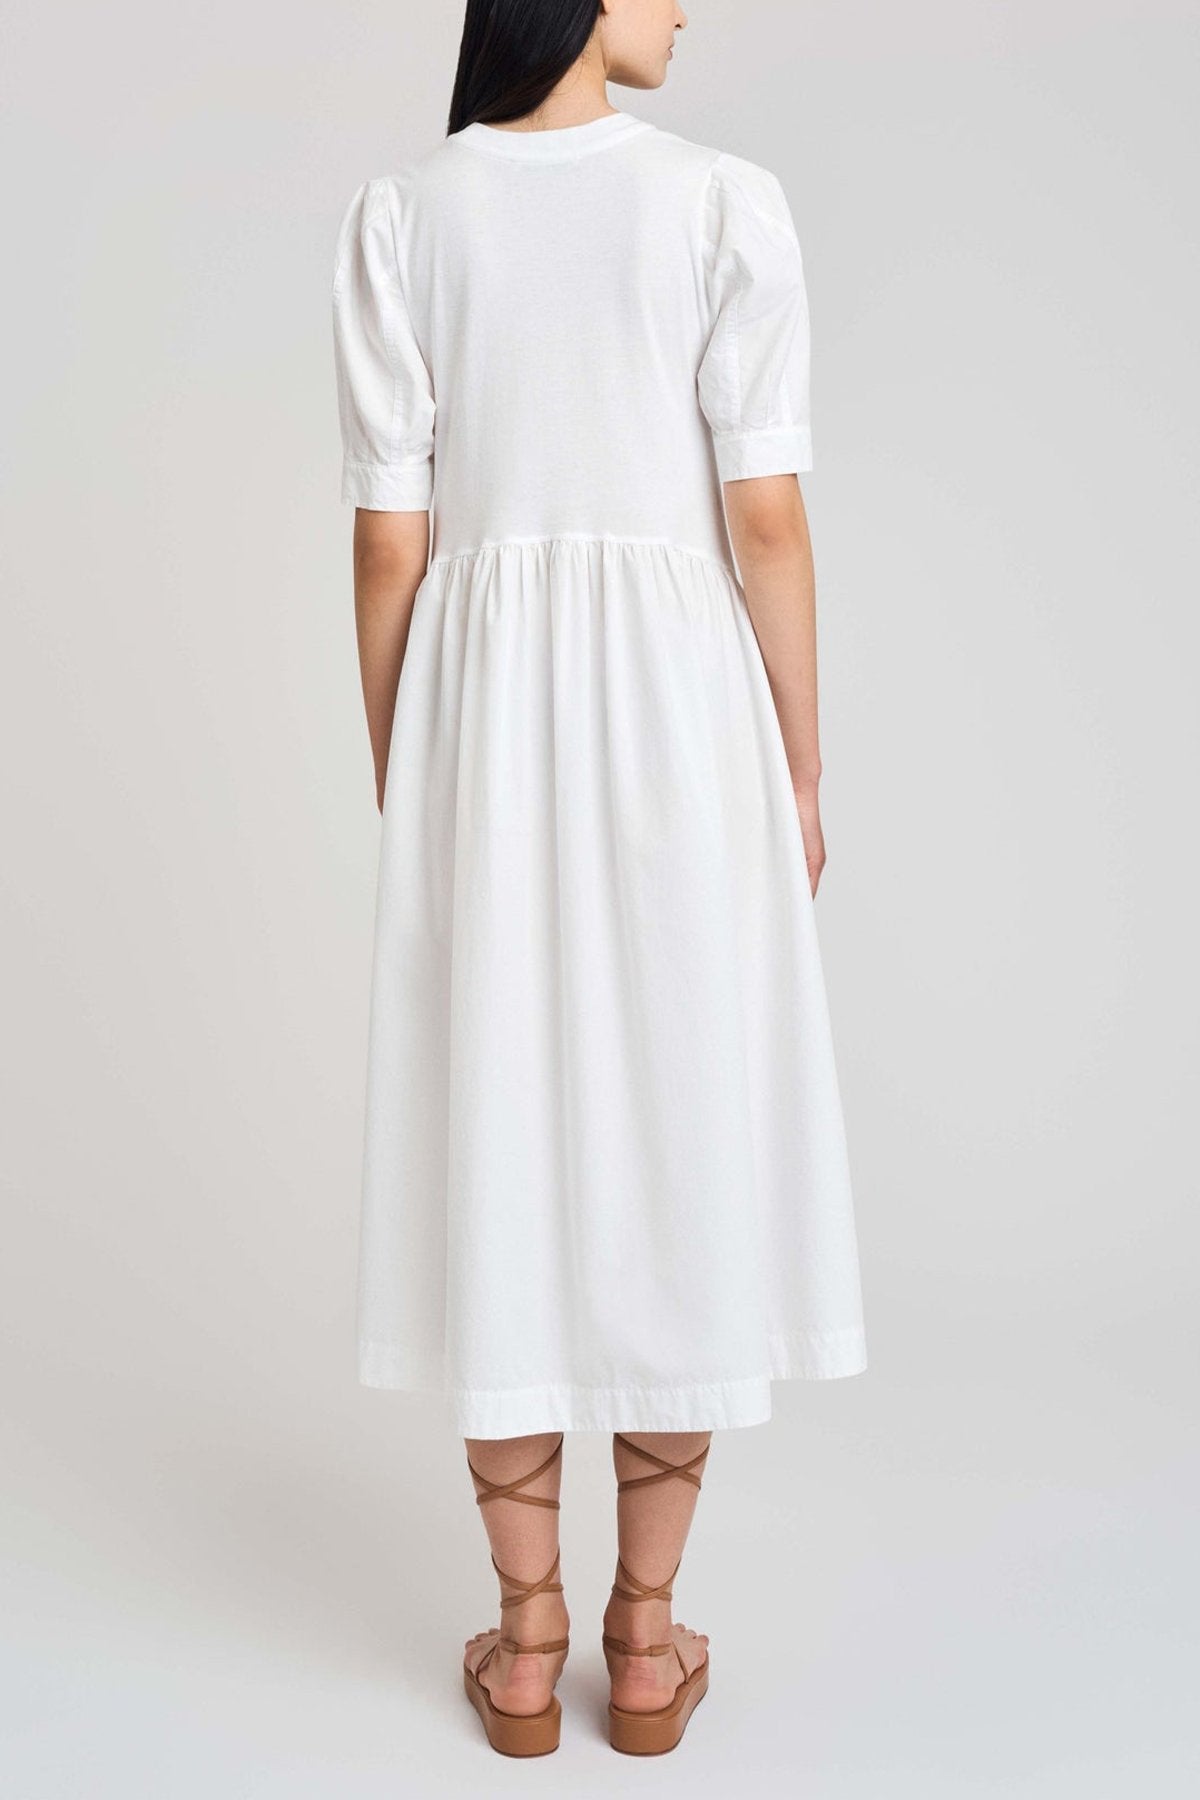 Monty Mixed Media Short Sleeve Dress in White - shop-olivia.com